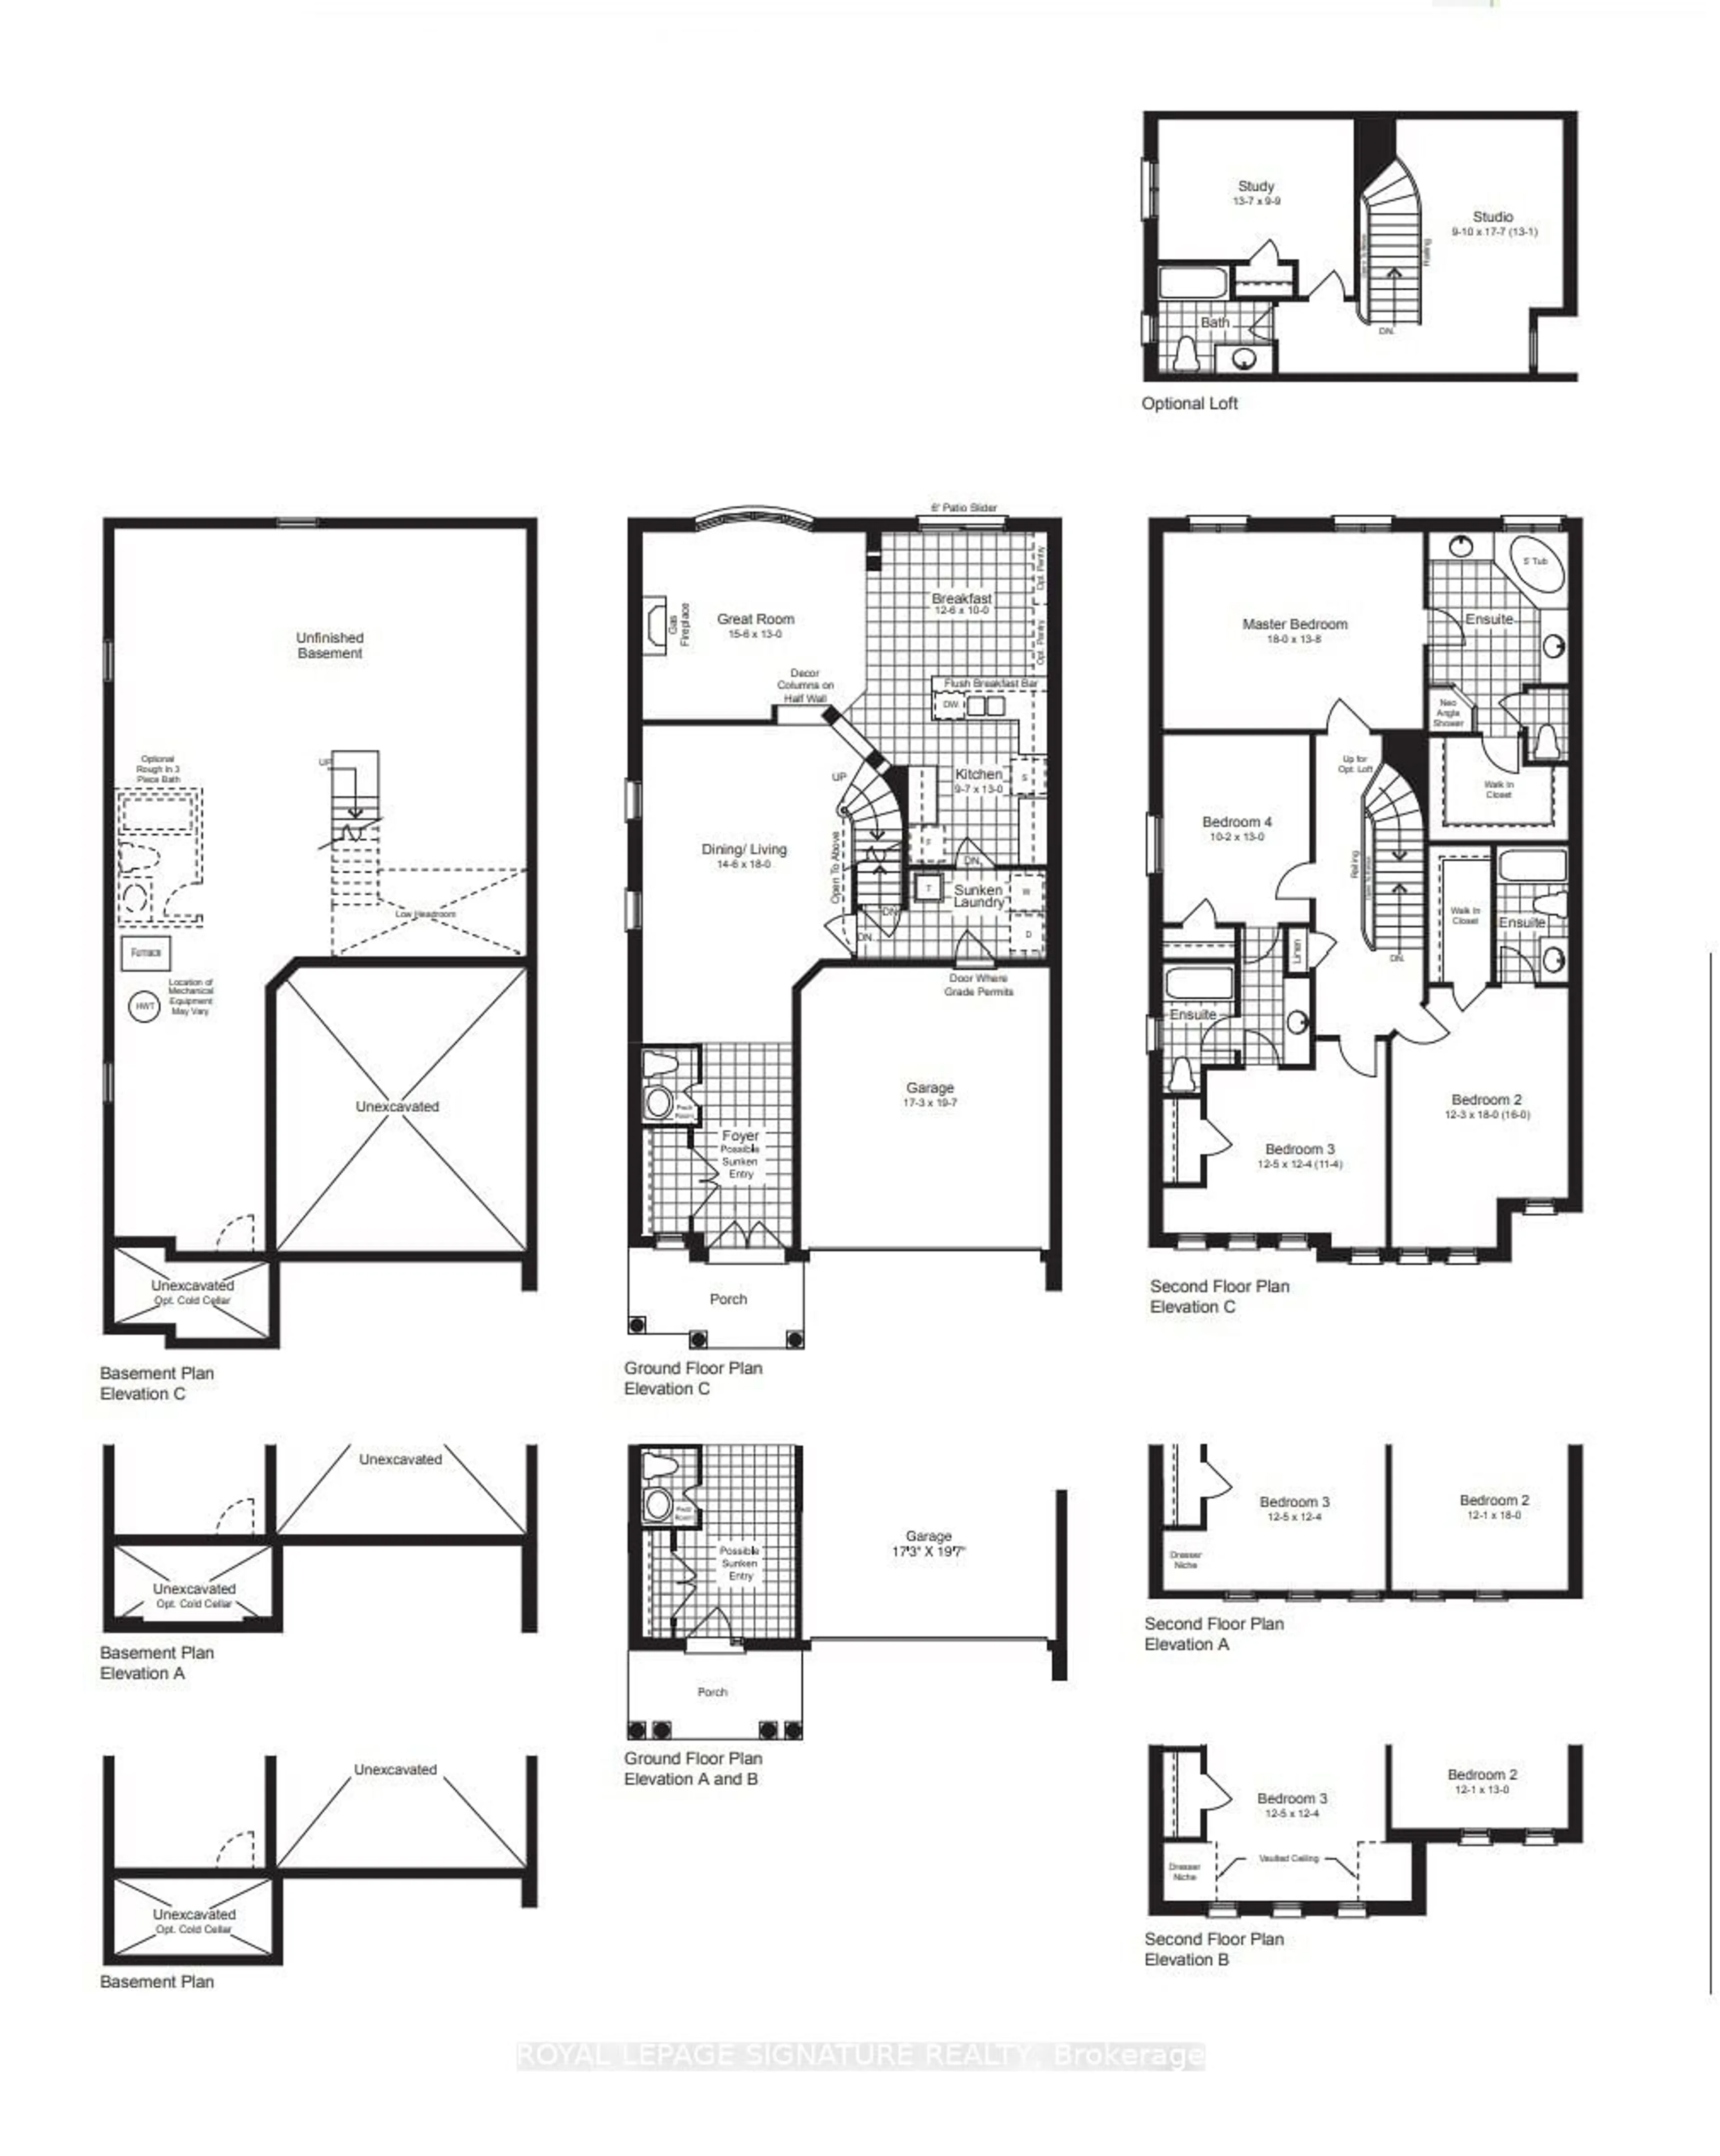 Floor plan for 20 Fawnridge Rd, Caledon Ontario L7C 3T8